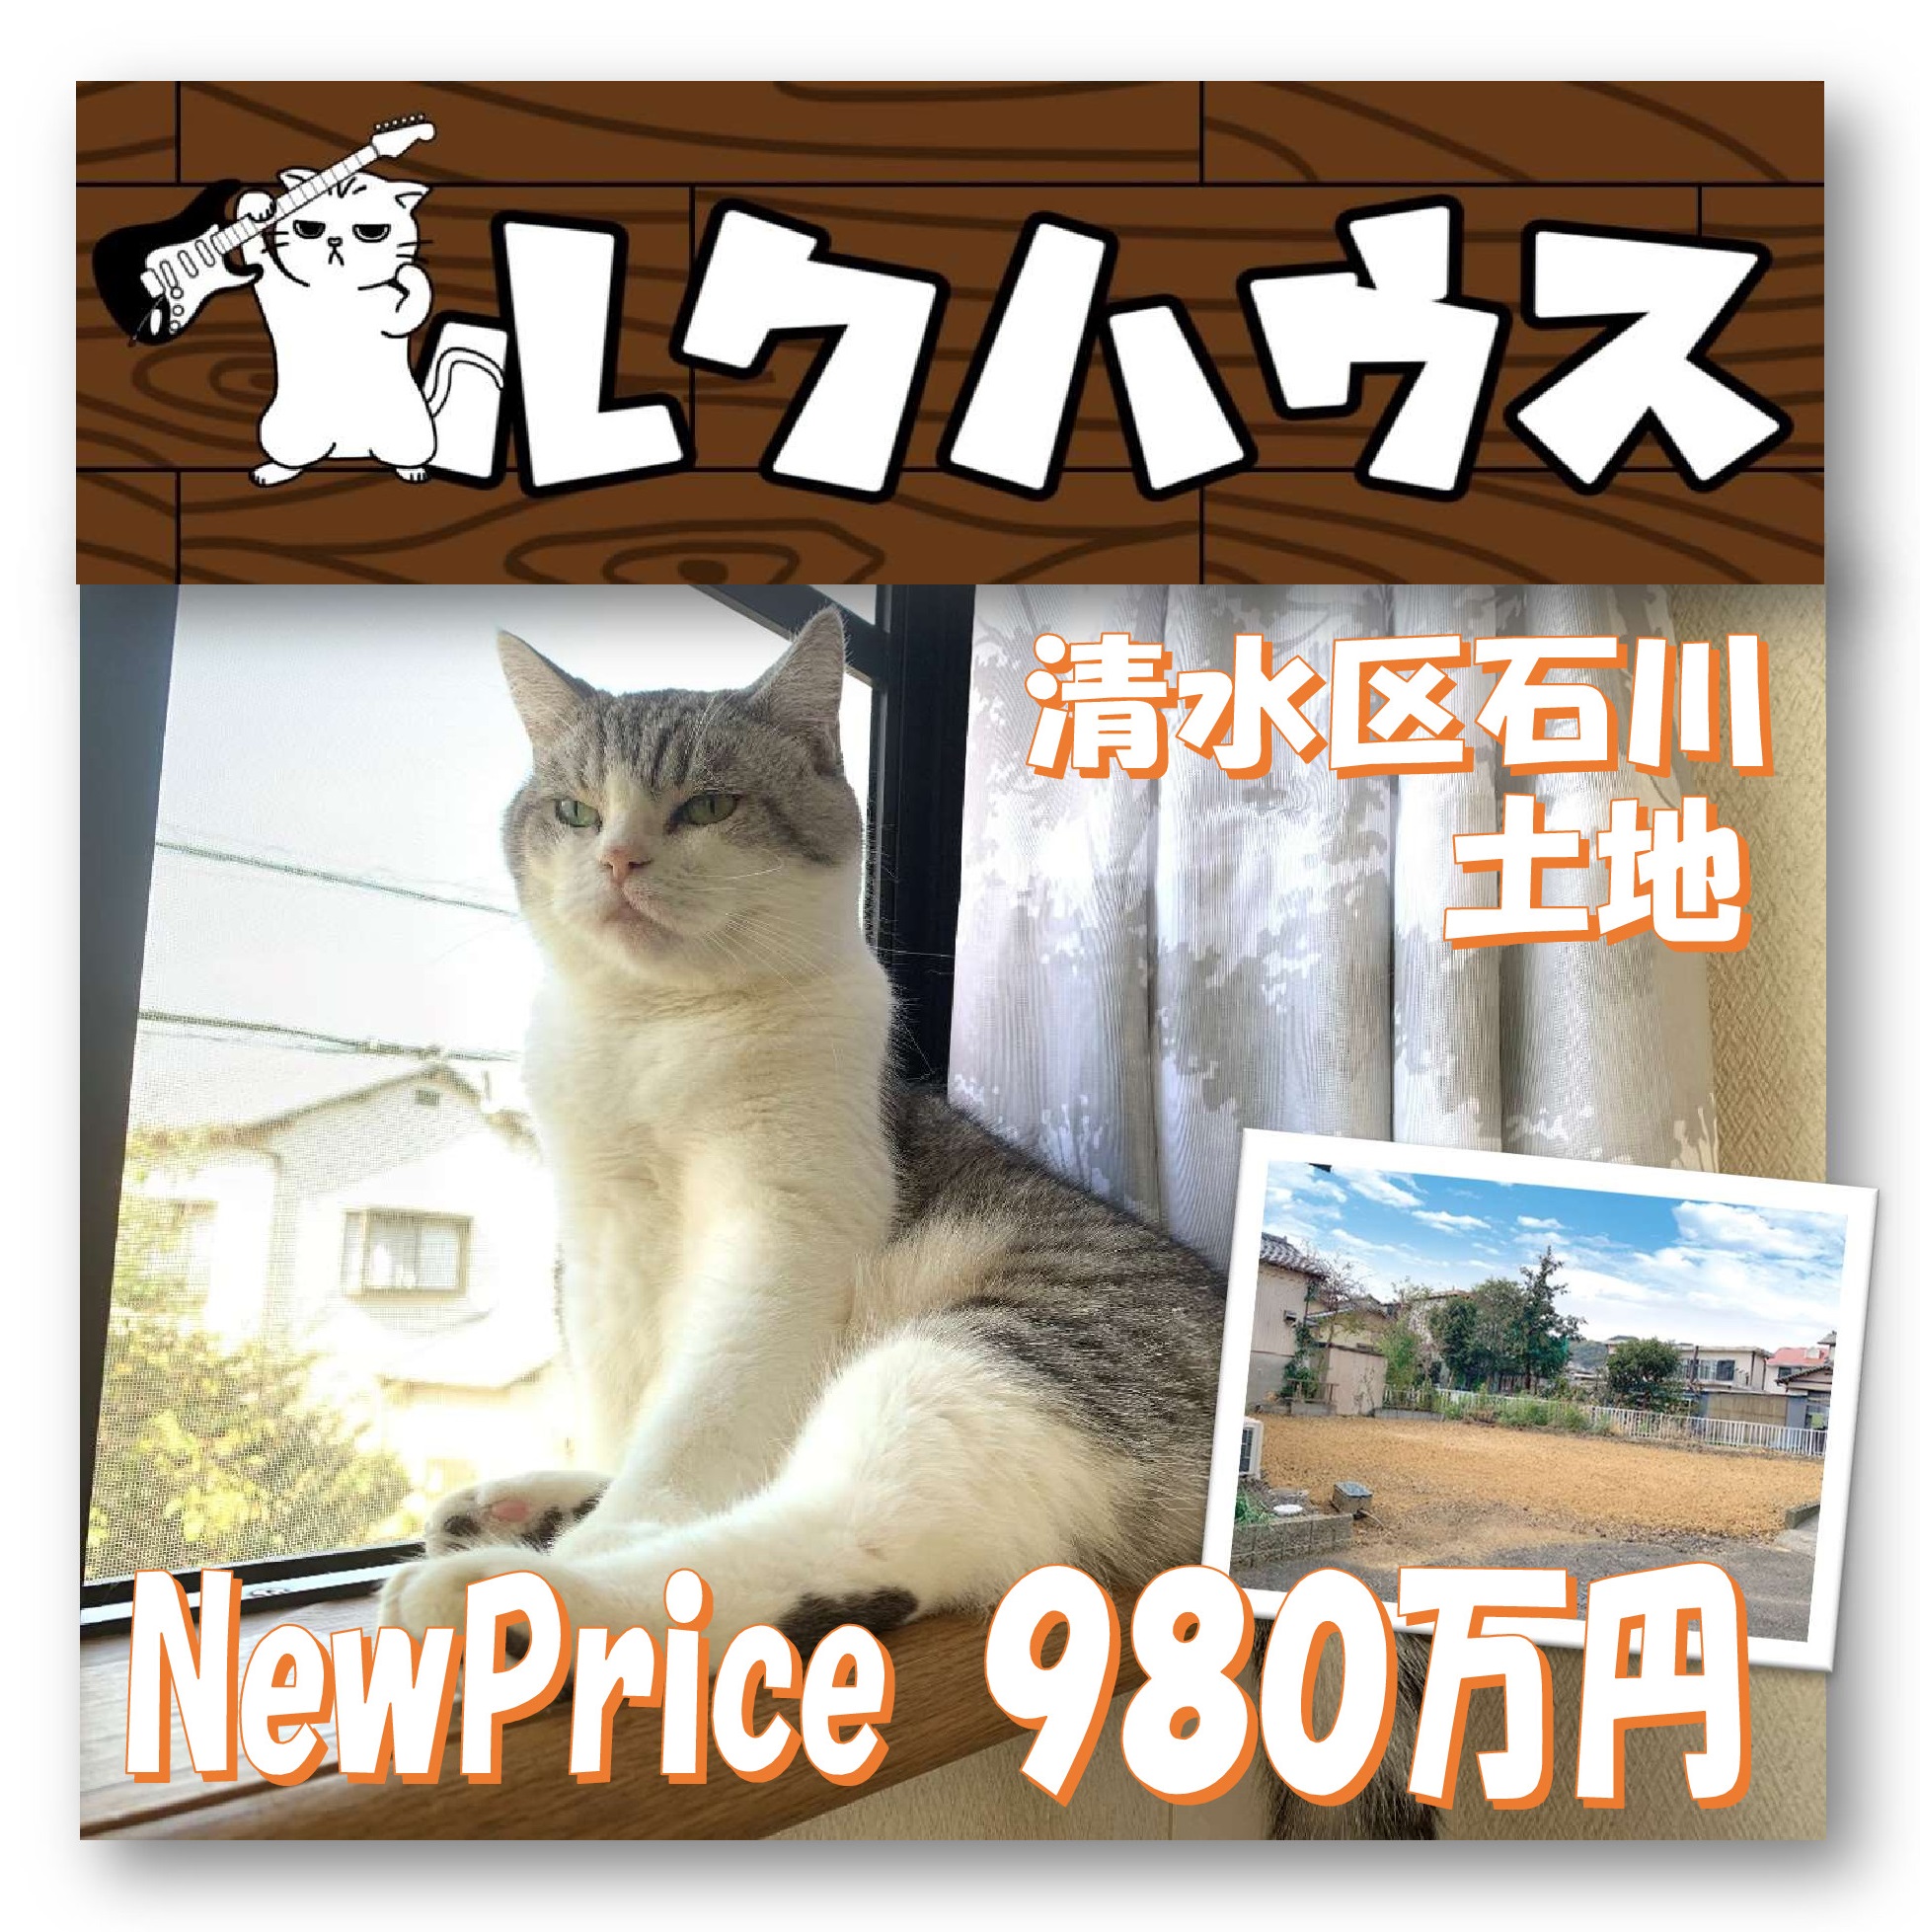 ■NewPriceは980万円■　清水区石川土地